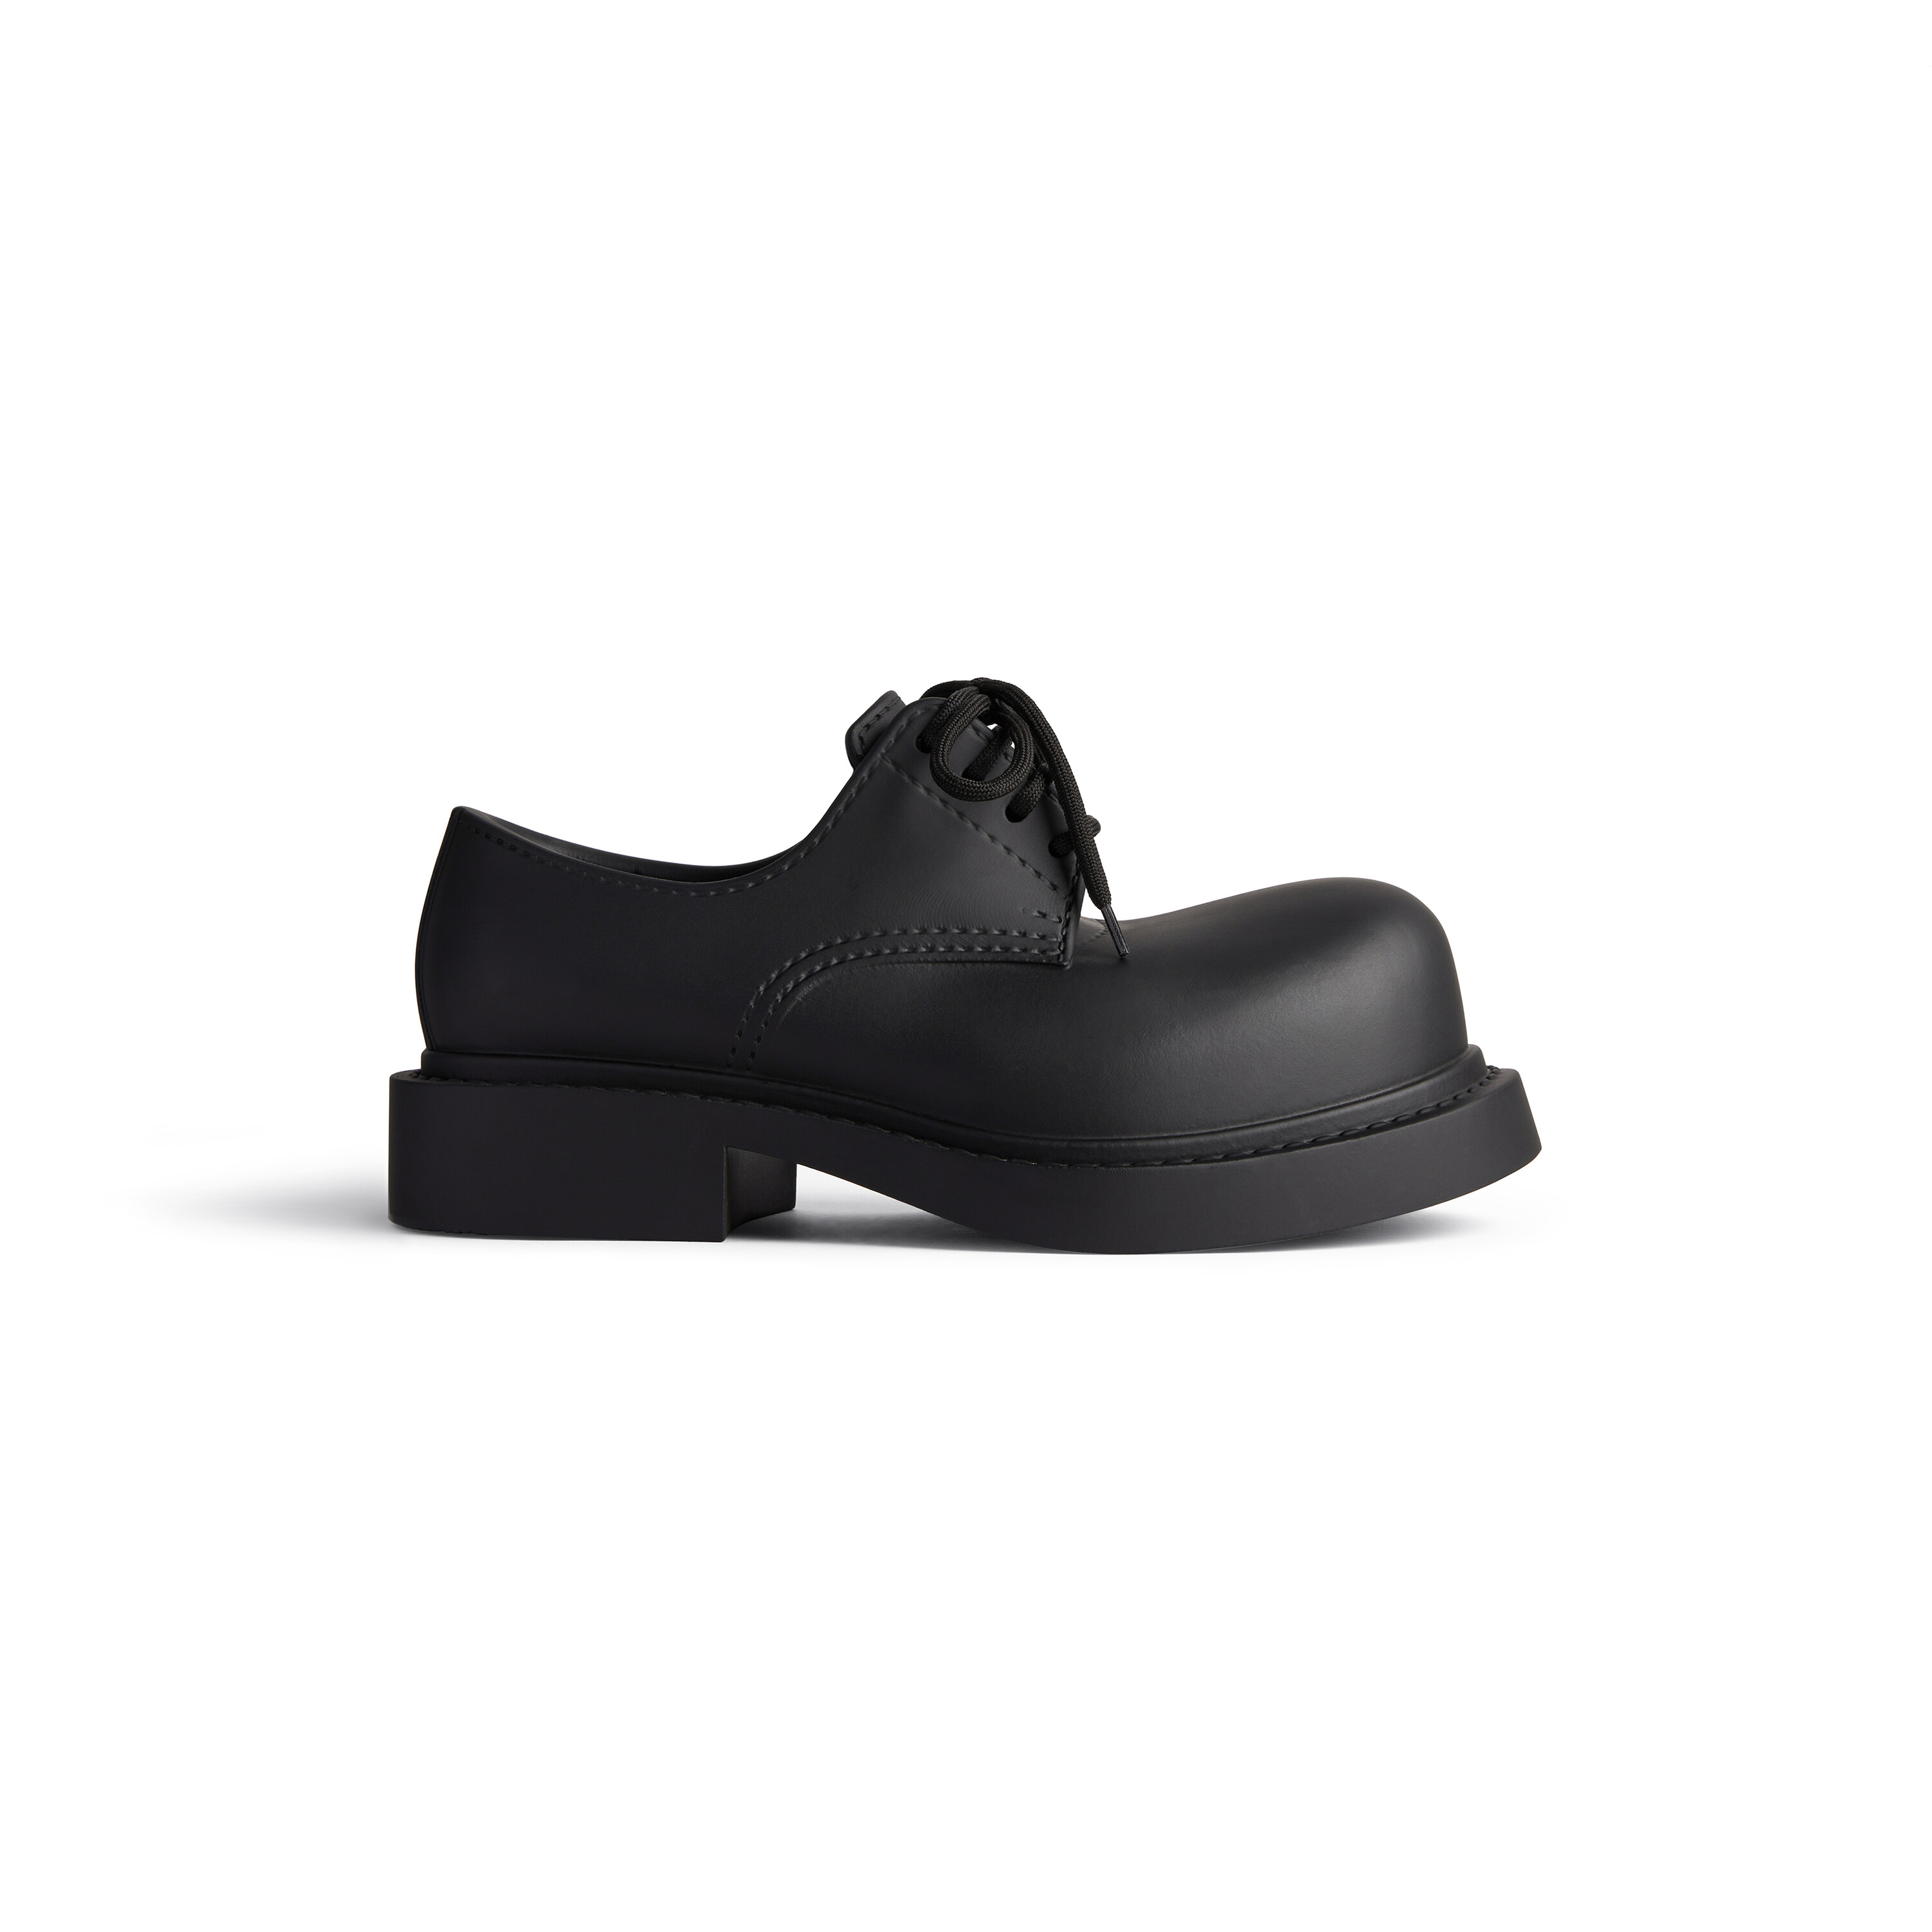 Space shoe faux patent leather loafers  Balenciaga  Men  Luisaviaroma